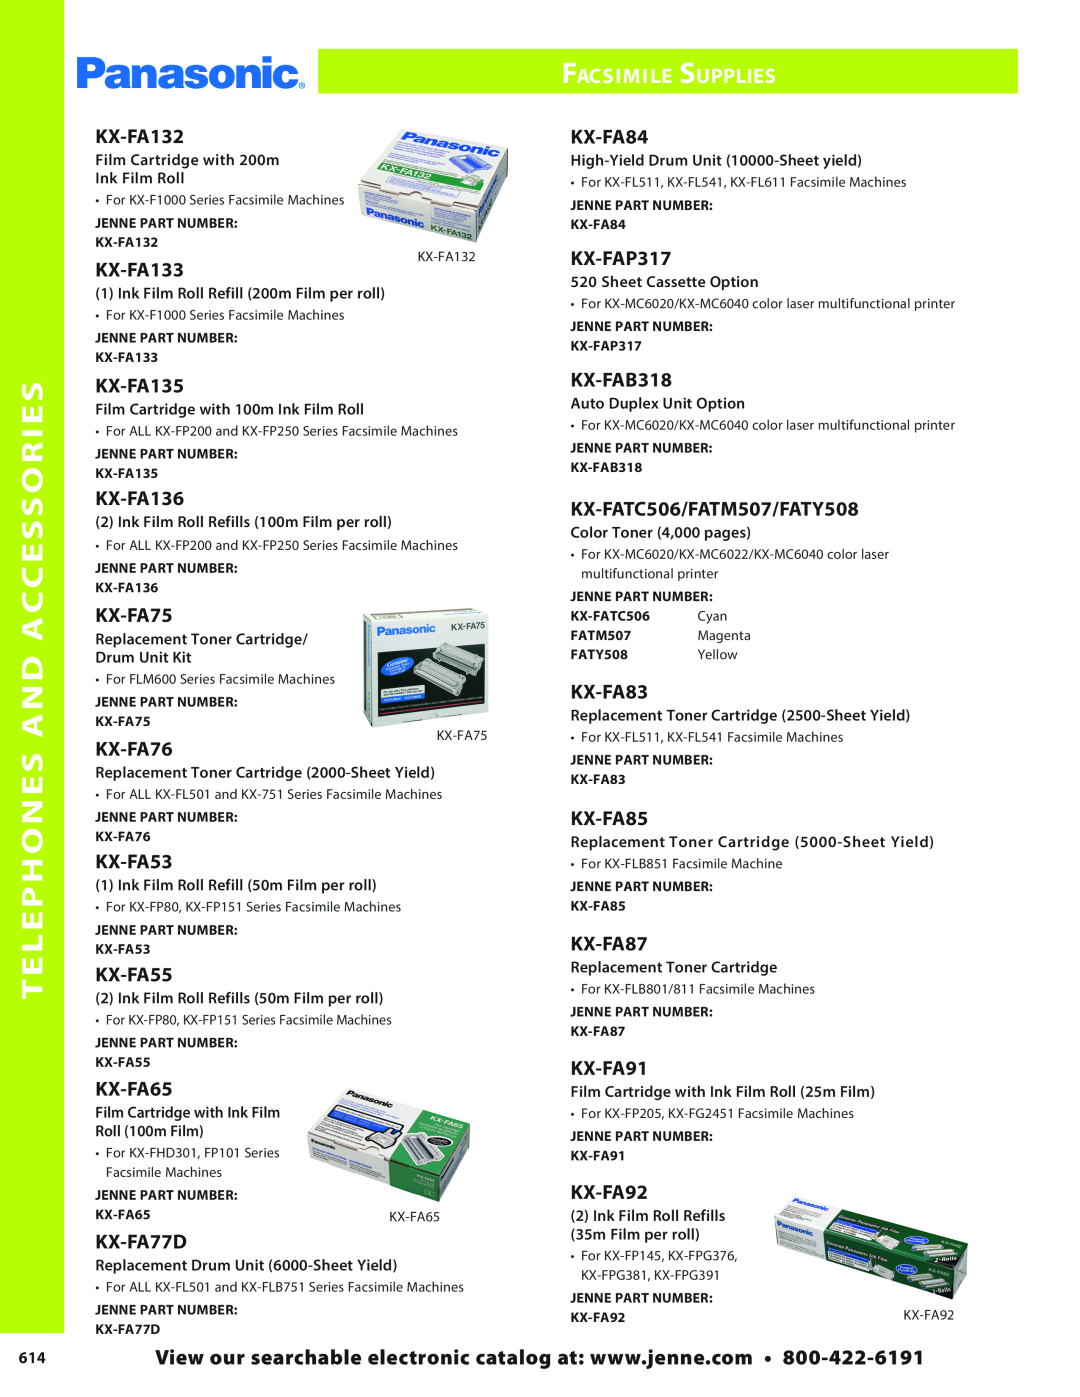 Panasonic PMPU2000 manual And Accessories, Telephones, Facsimile Supplies 